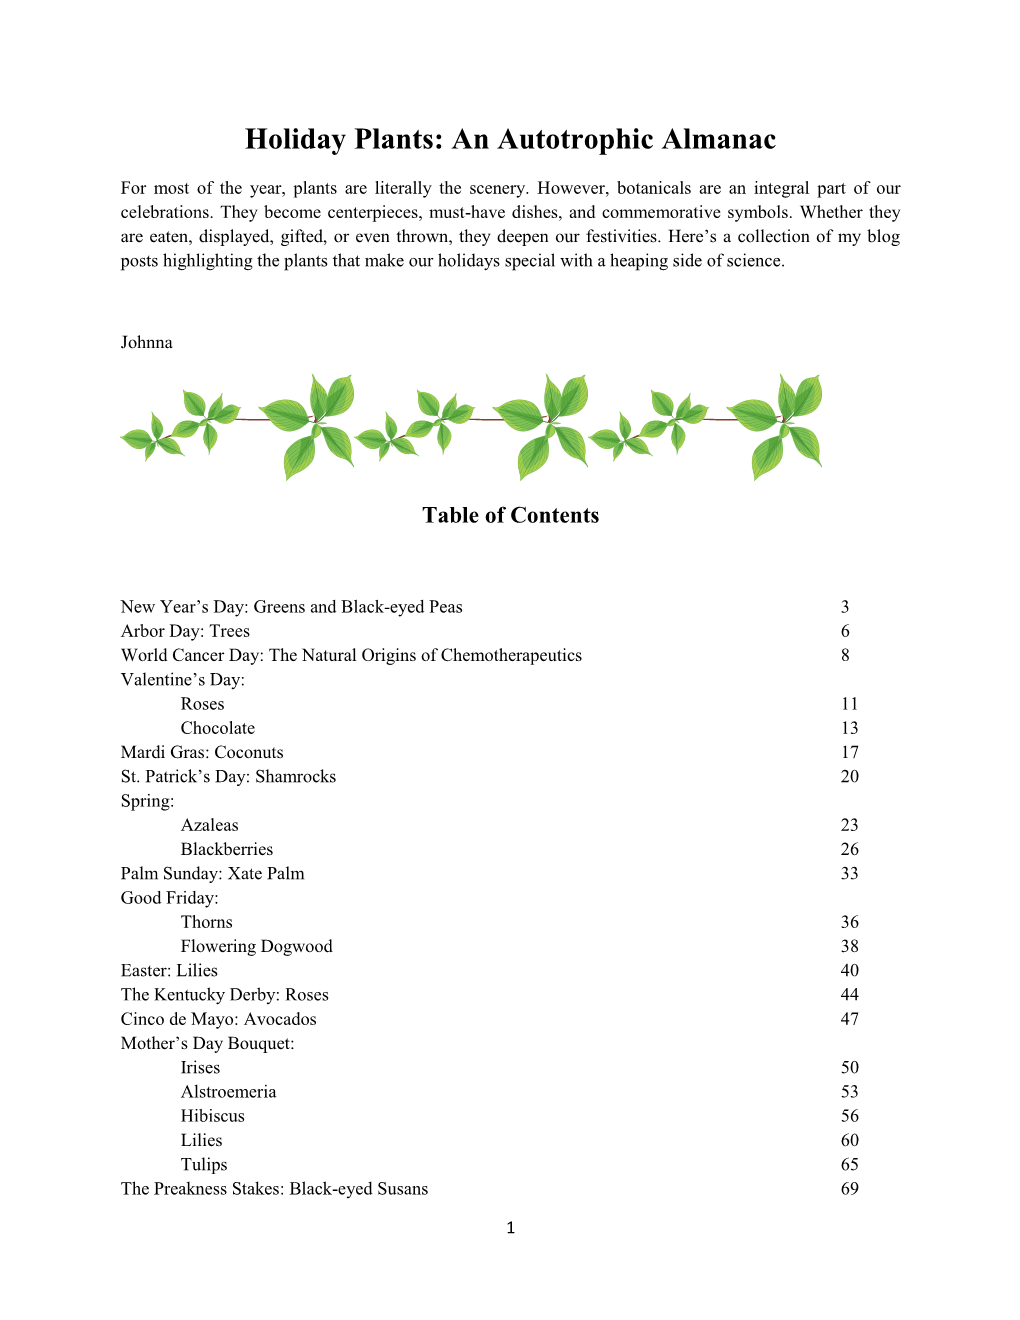 Holiday Plants: an Autotrophic Almanac